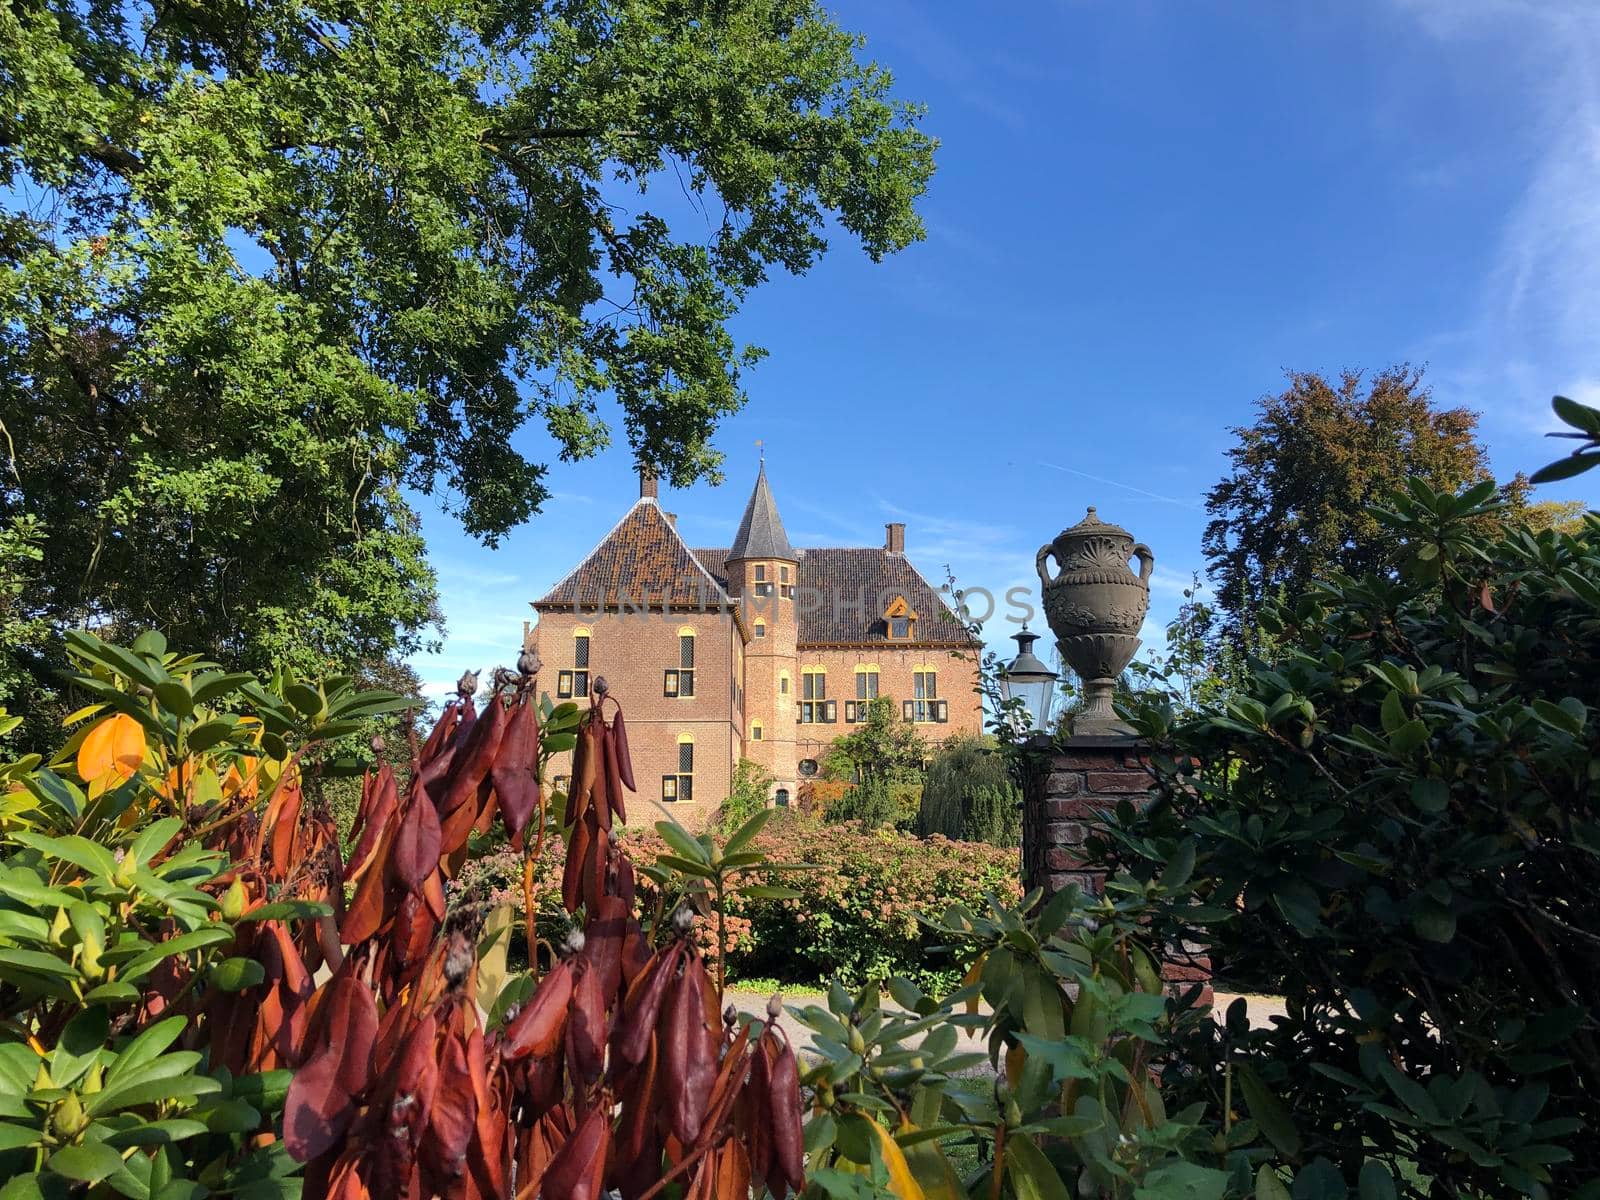 Castle Vorden in Gelderland, The Netherlands